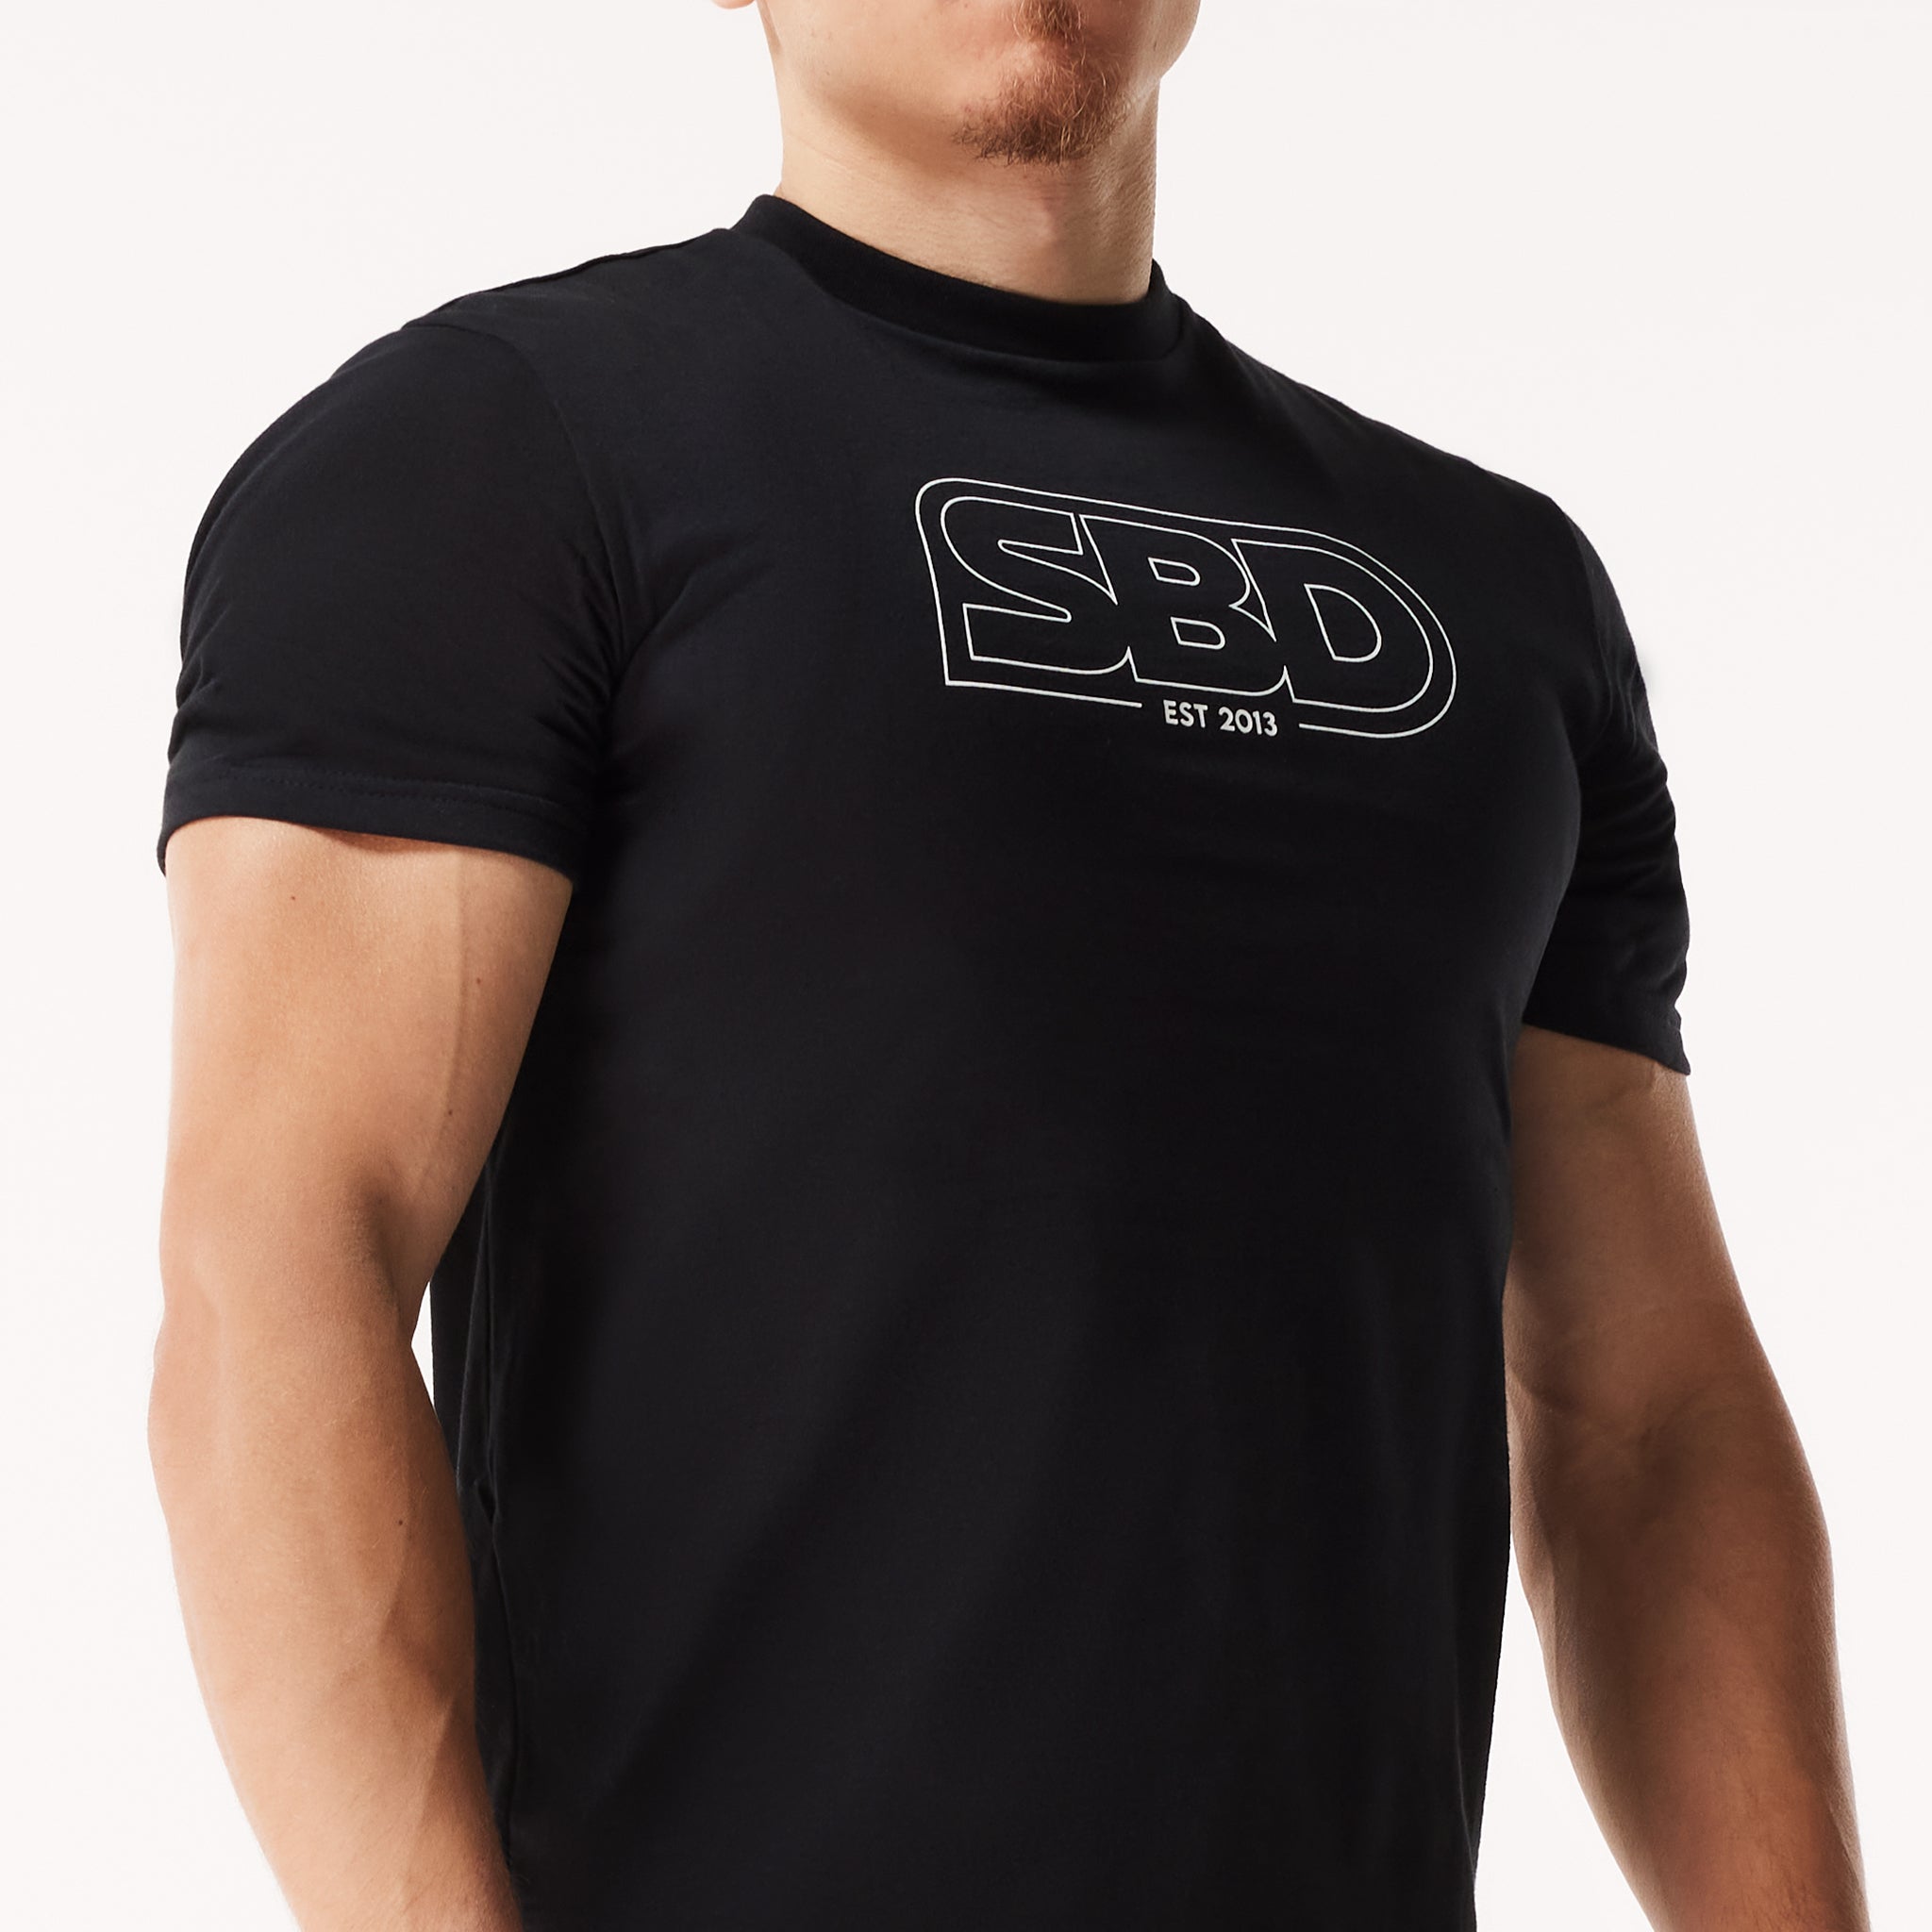 SBD Brand shirt Momentum Limited Edition